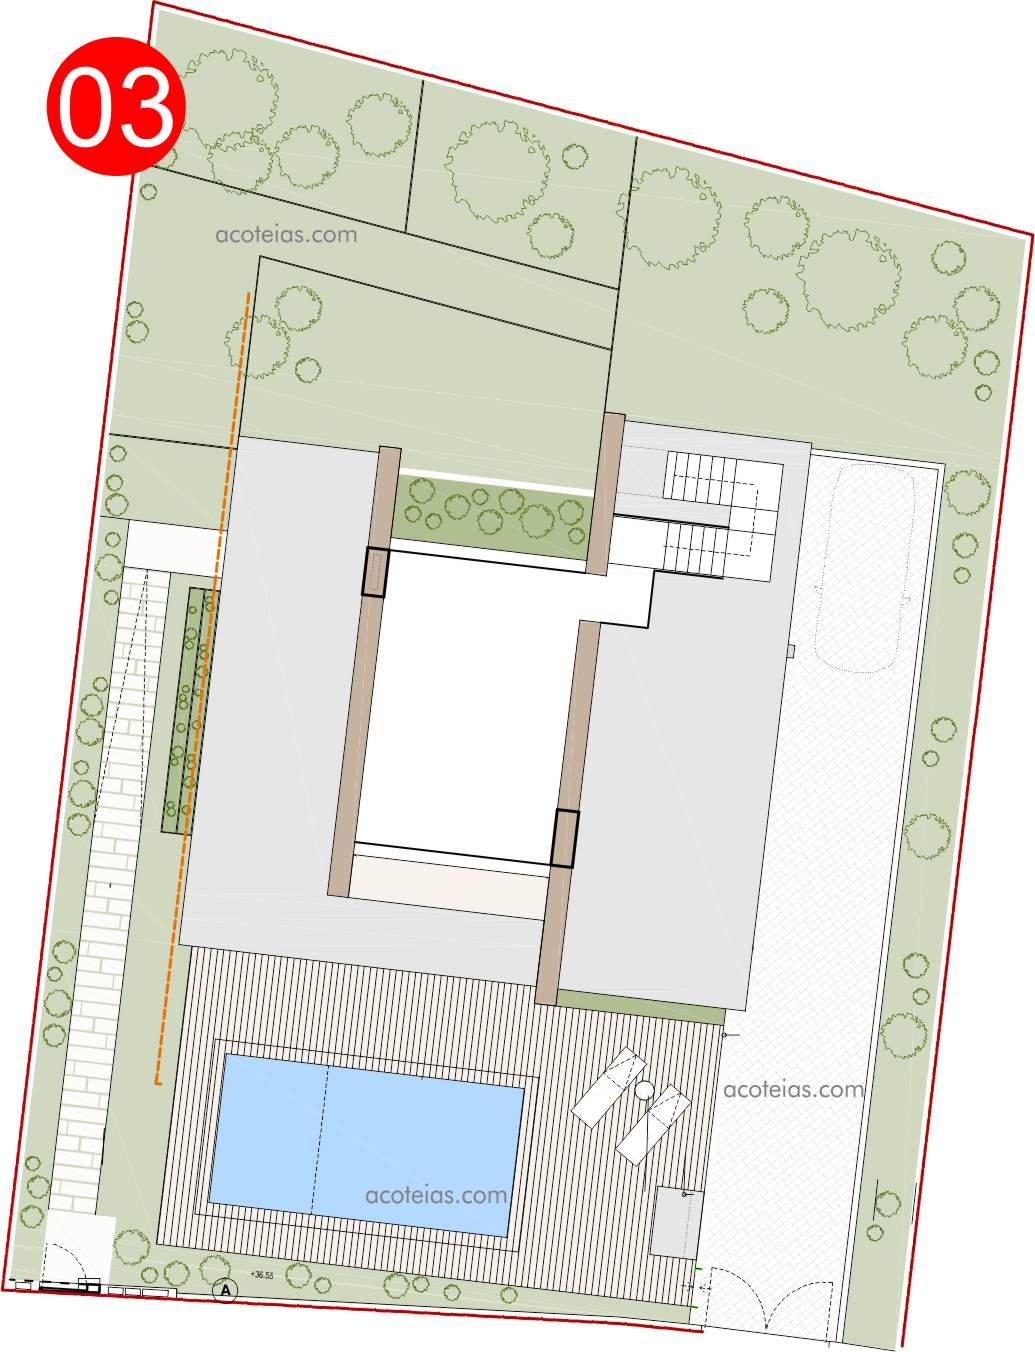 Construction plan of the Açoteias house 03